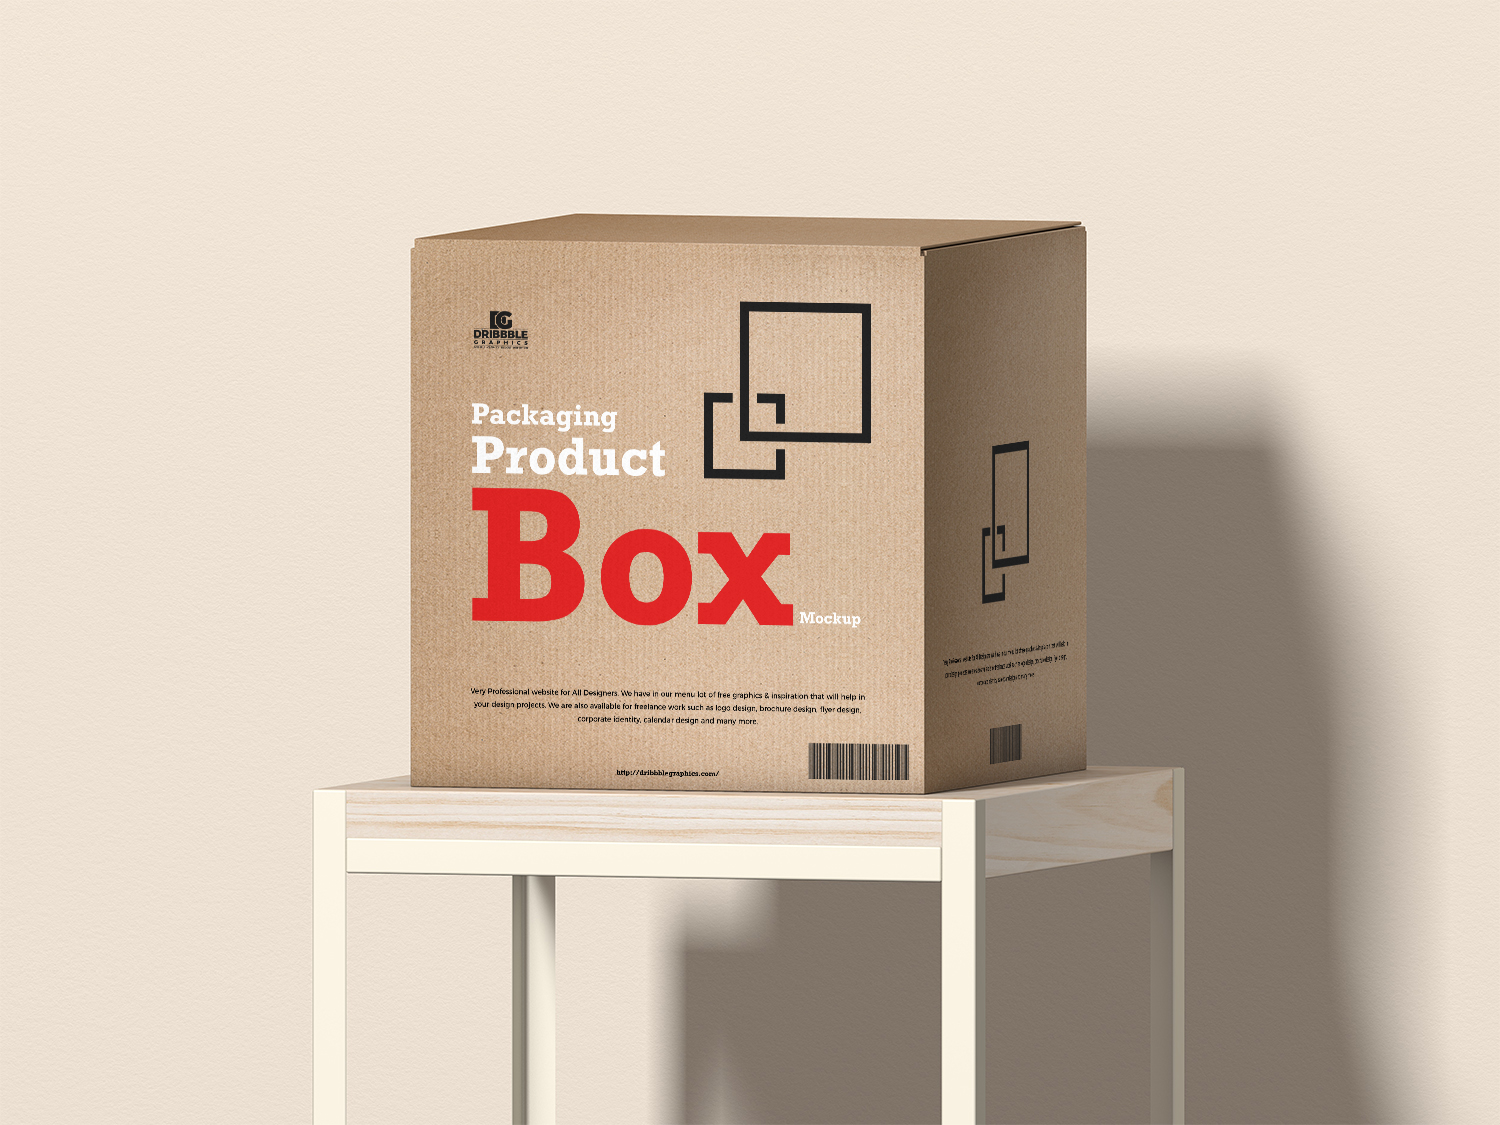 Packaging Product Box Mockup